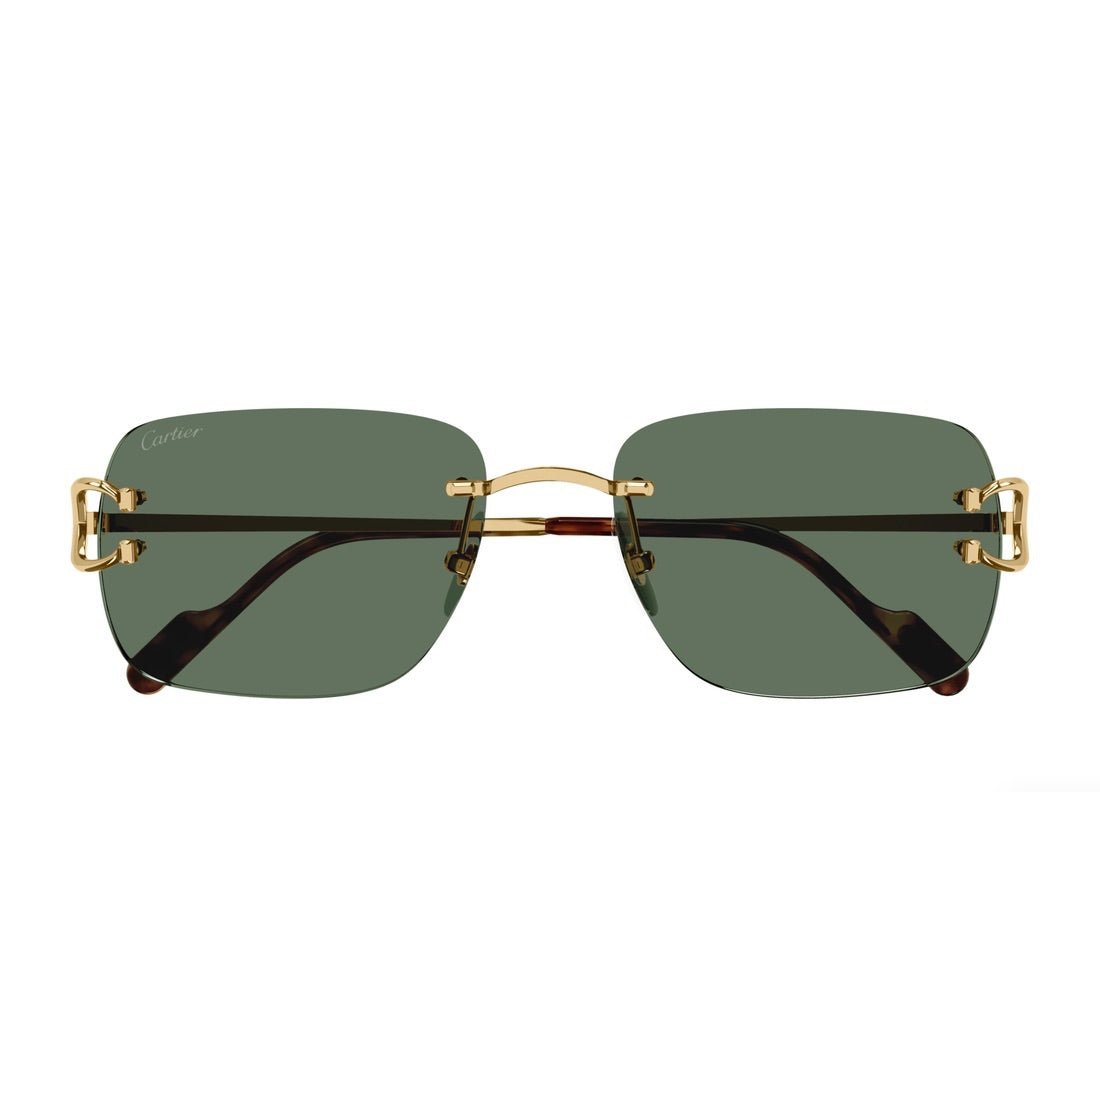 Cartier Vintage Diablo sunglasses worn by 2 Chainz in BEEZ IN THE TRAP by  Nicki Minaj (2012) @cartier | Pretty people, Sunglasses, Nicki minaj music  videos